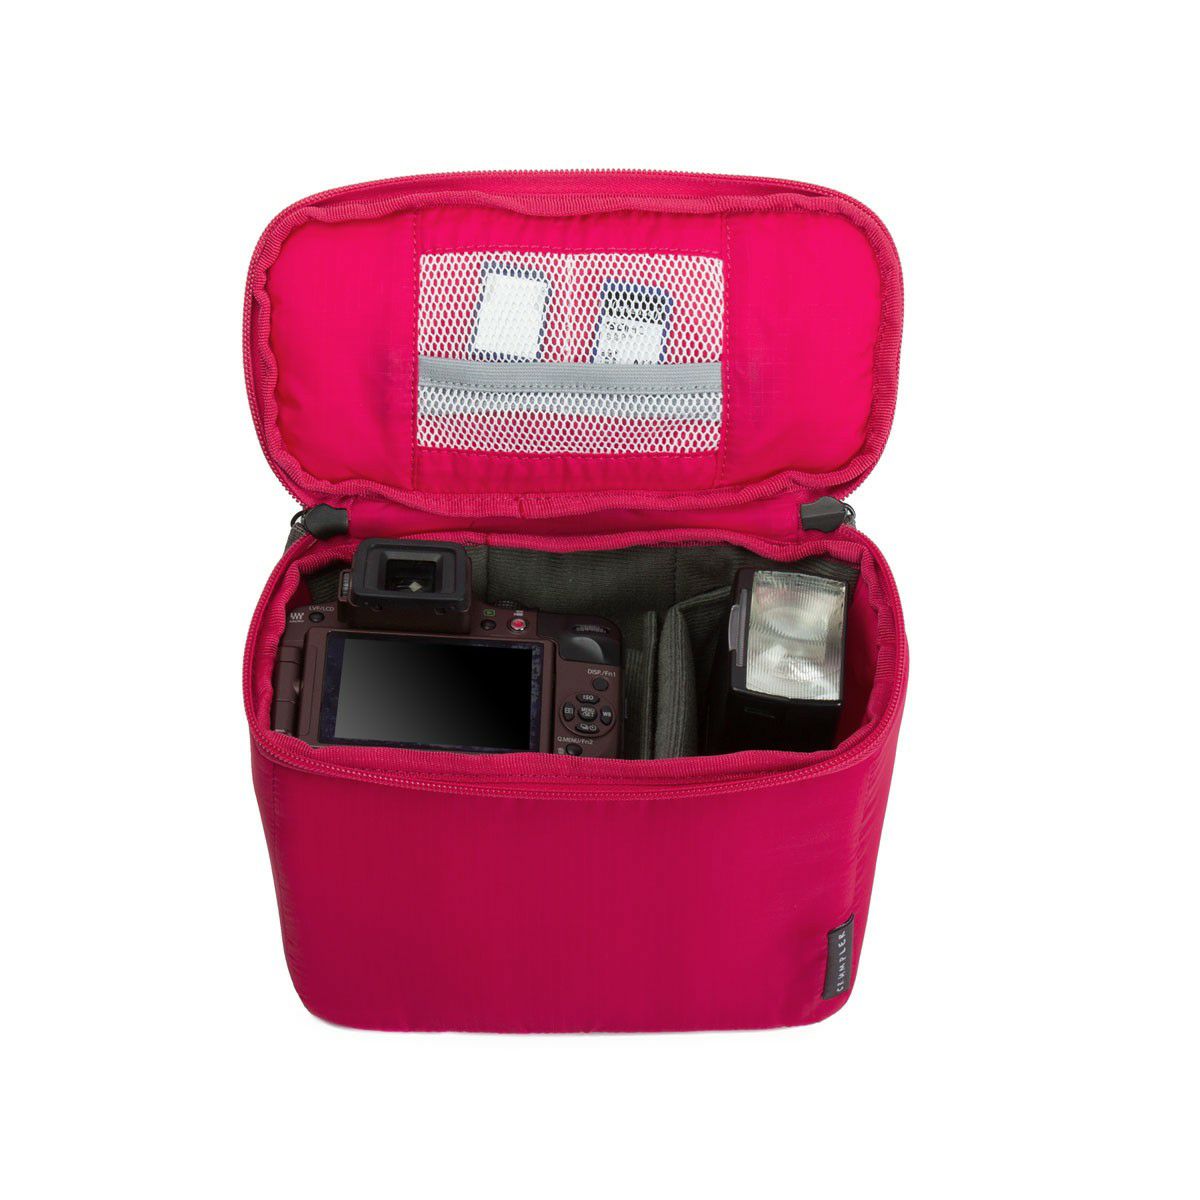 Crumpler The inlay Zip Pouch XS deep pink TIZP-XS-004 camera accessories - internal unit